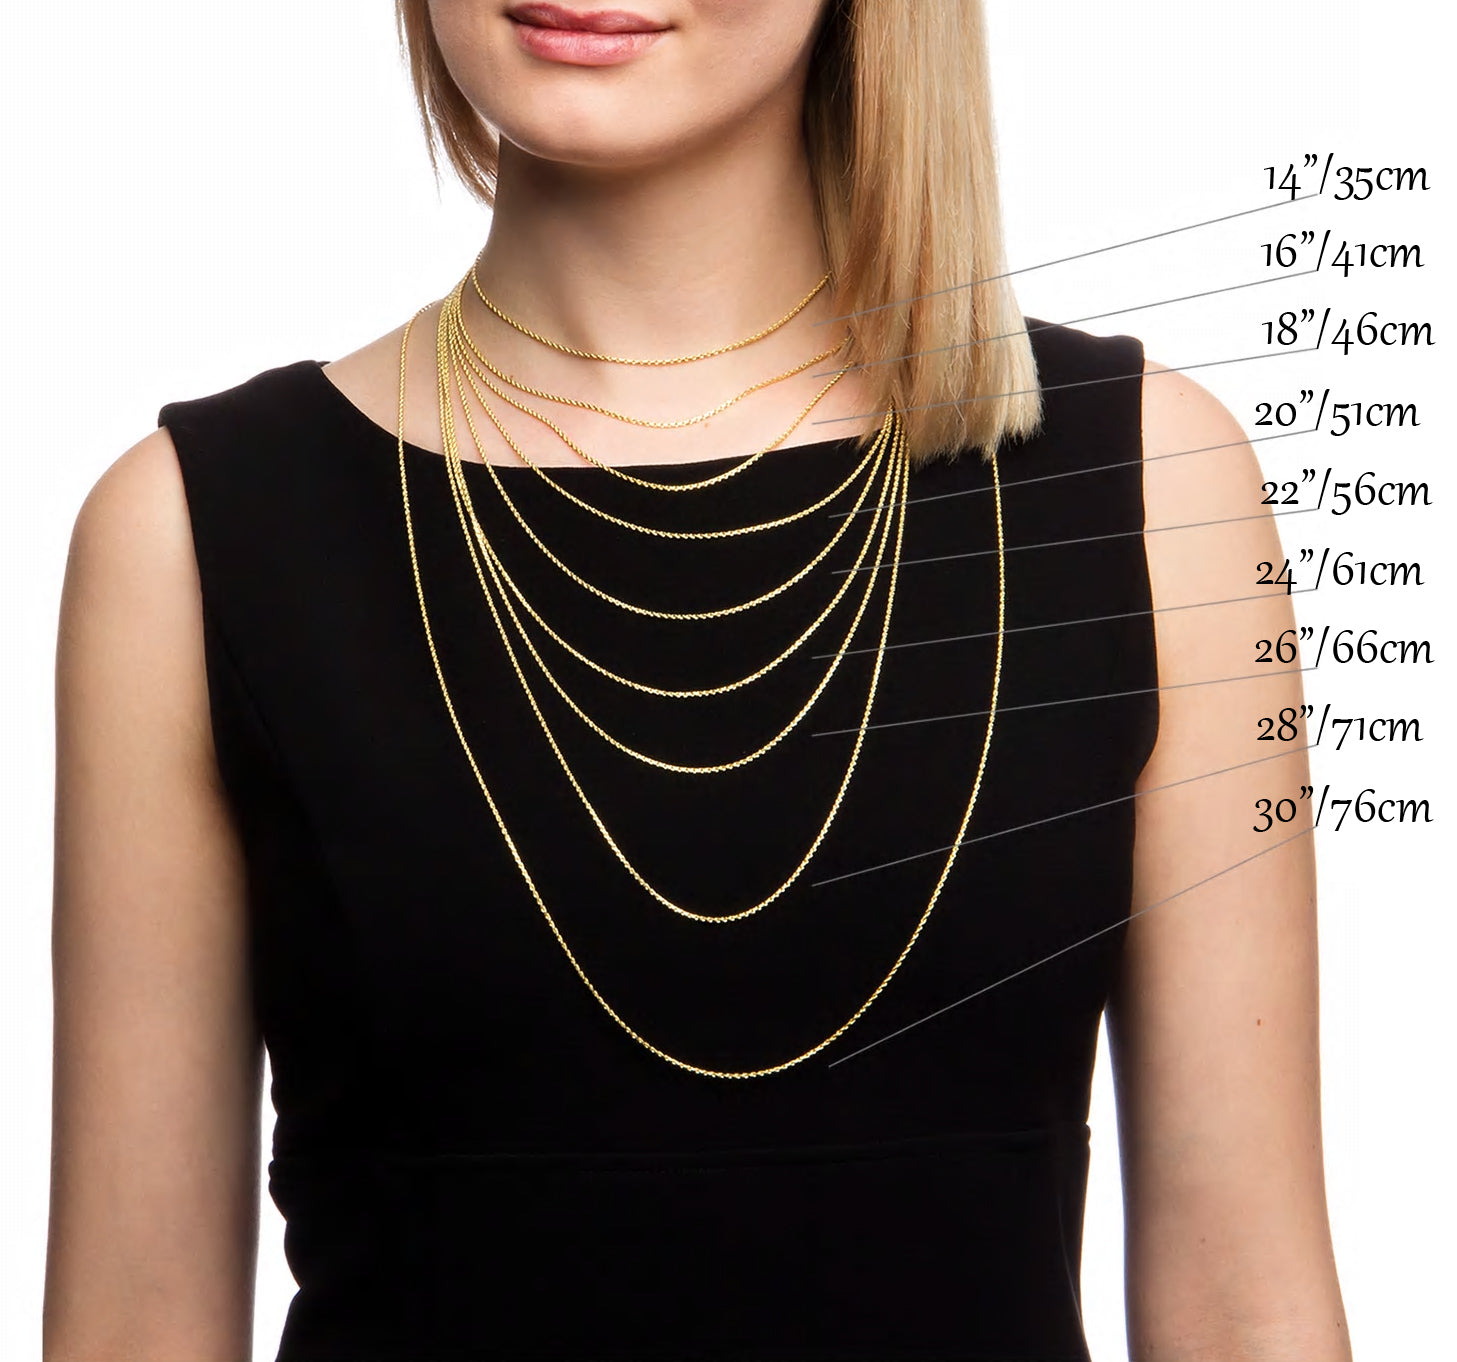 14k Gold Monogram Necklace Monogram Necklace in Gold -   Monogram  necklace gold, Personalized monogram necklace, Monogram necklace